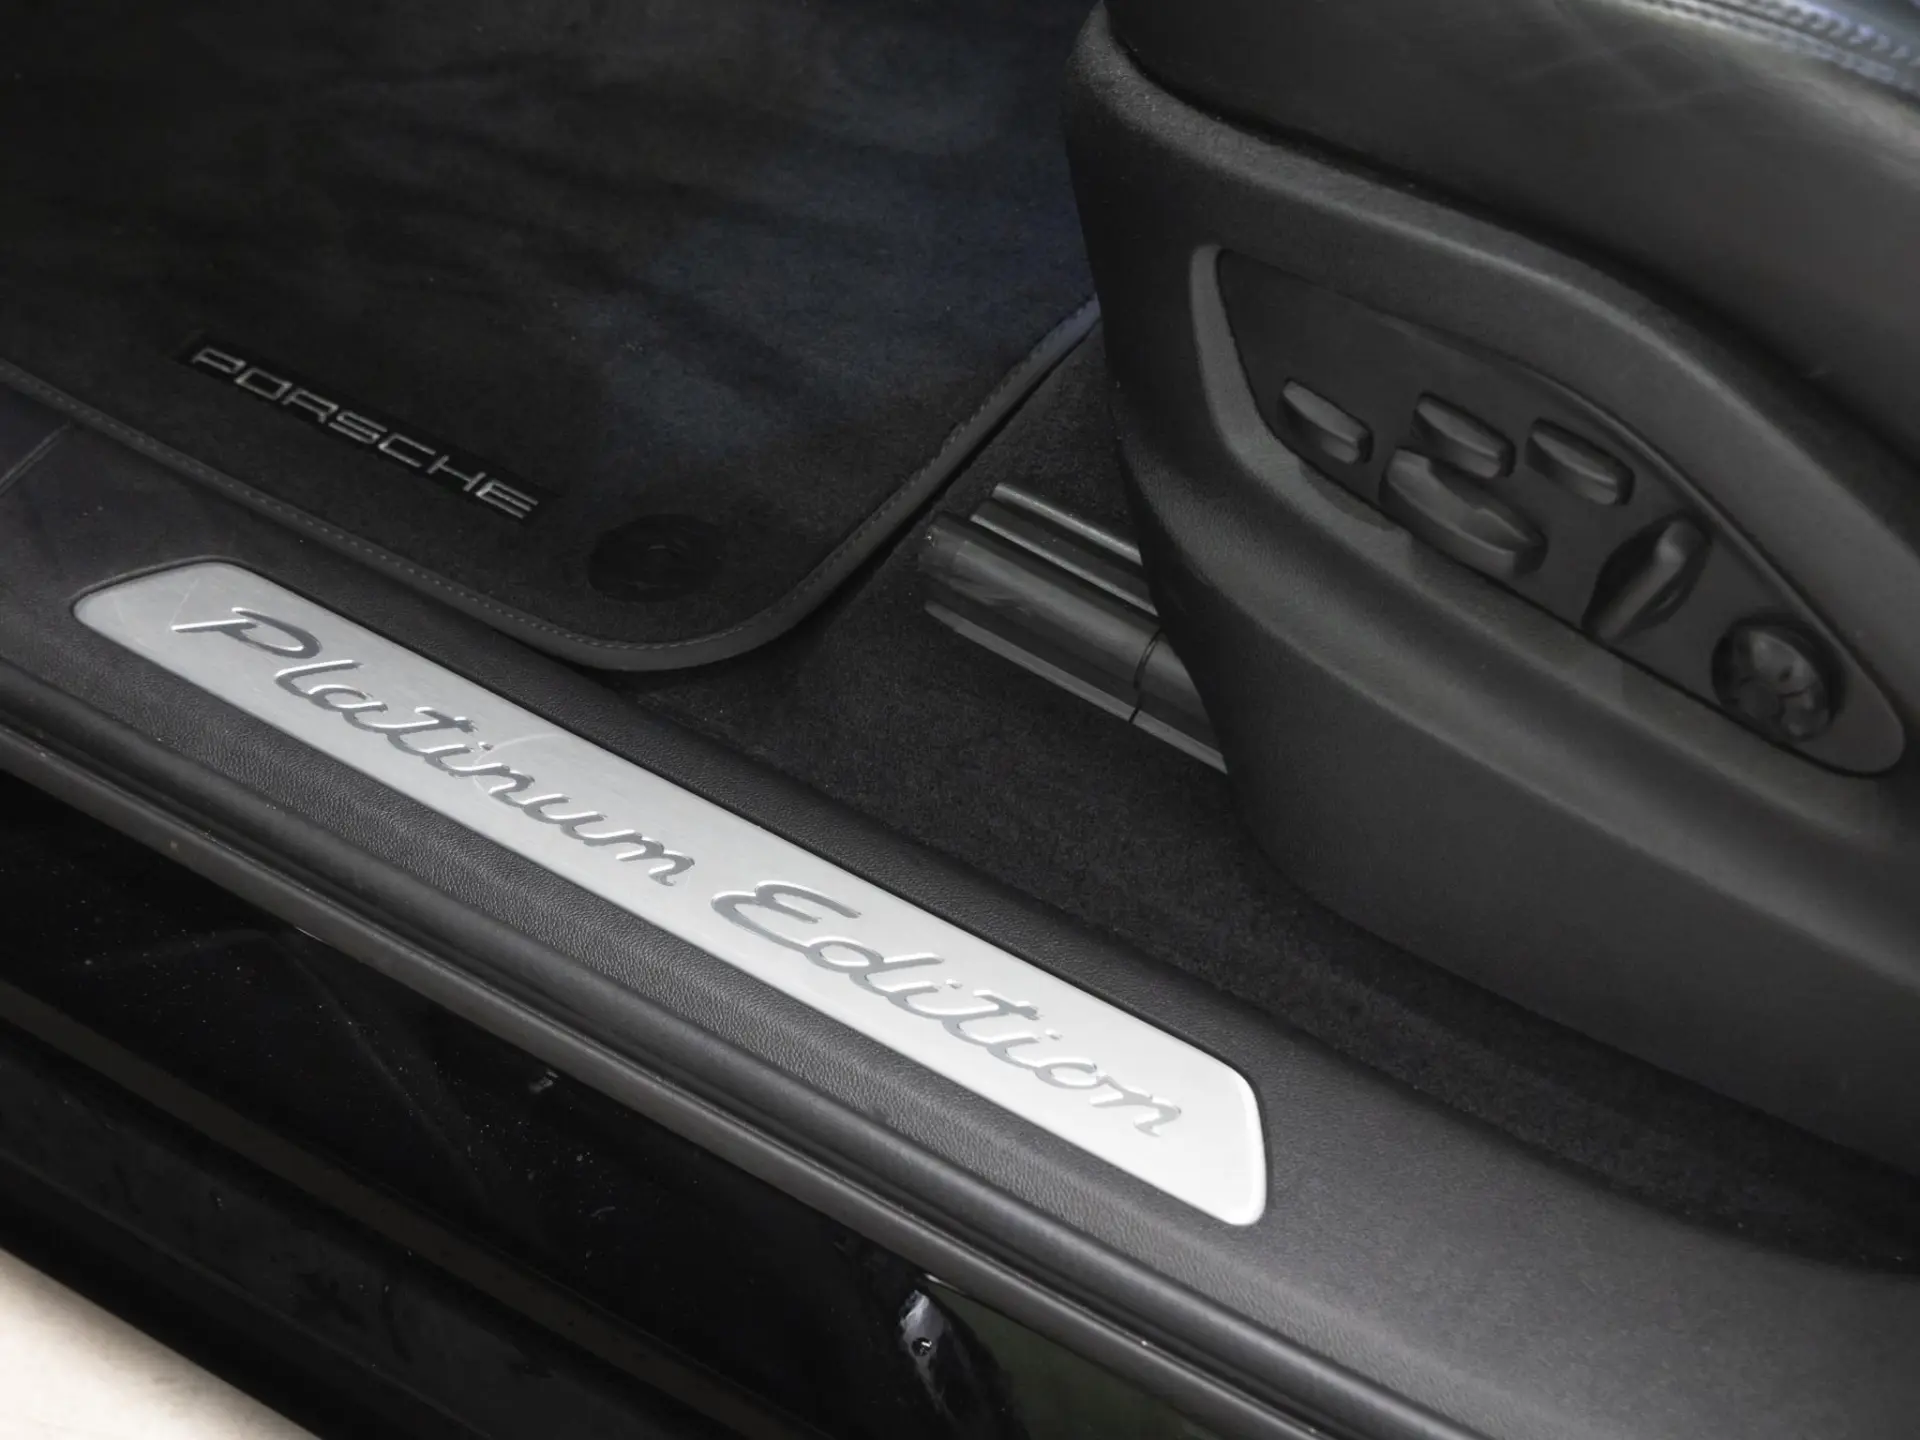 Cayenne E-Hybrid Coupé Platinum Edition